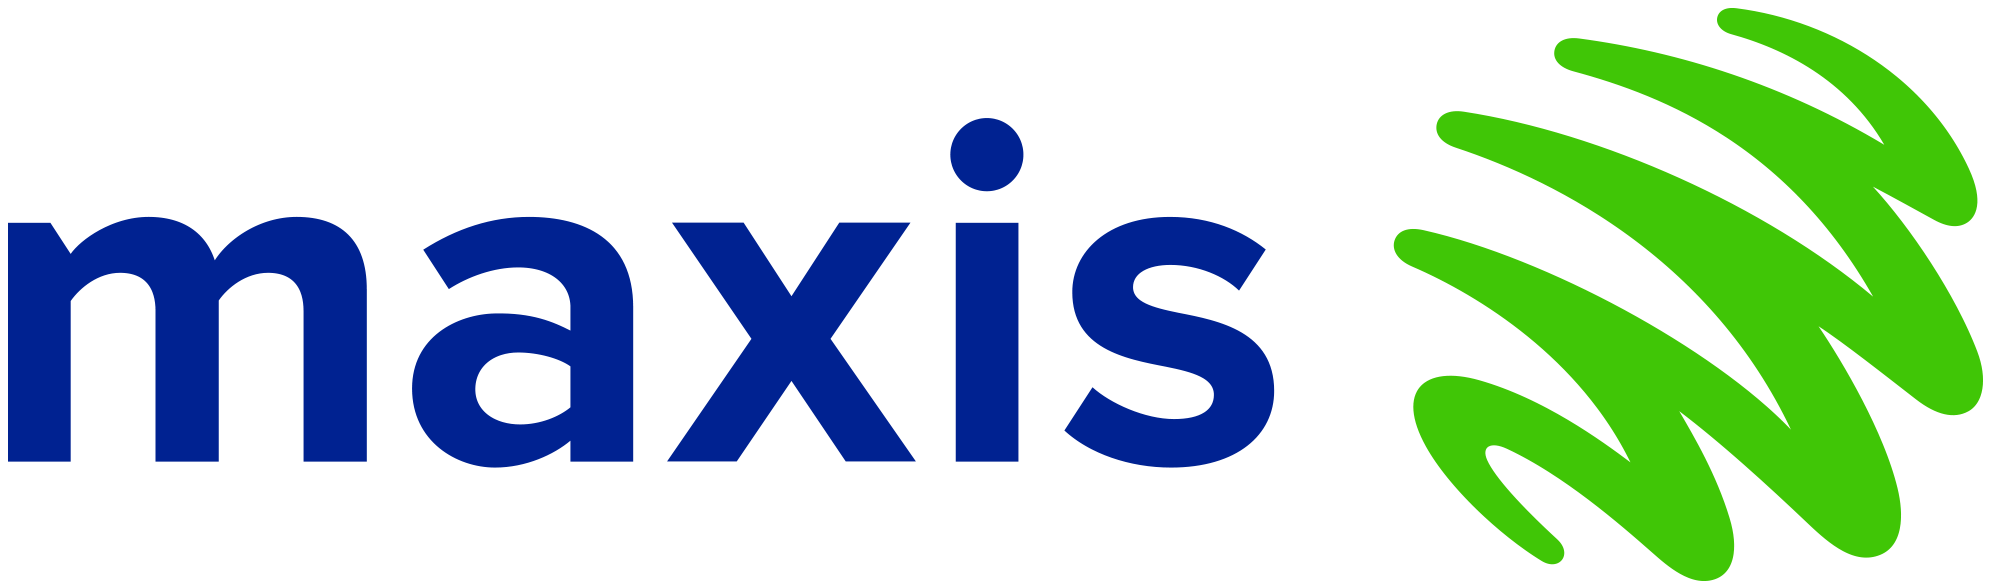 Maxis logo_1990x588